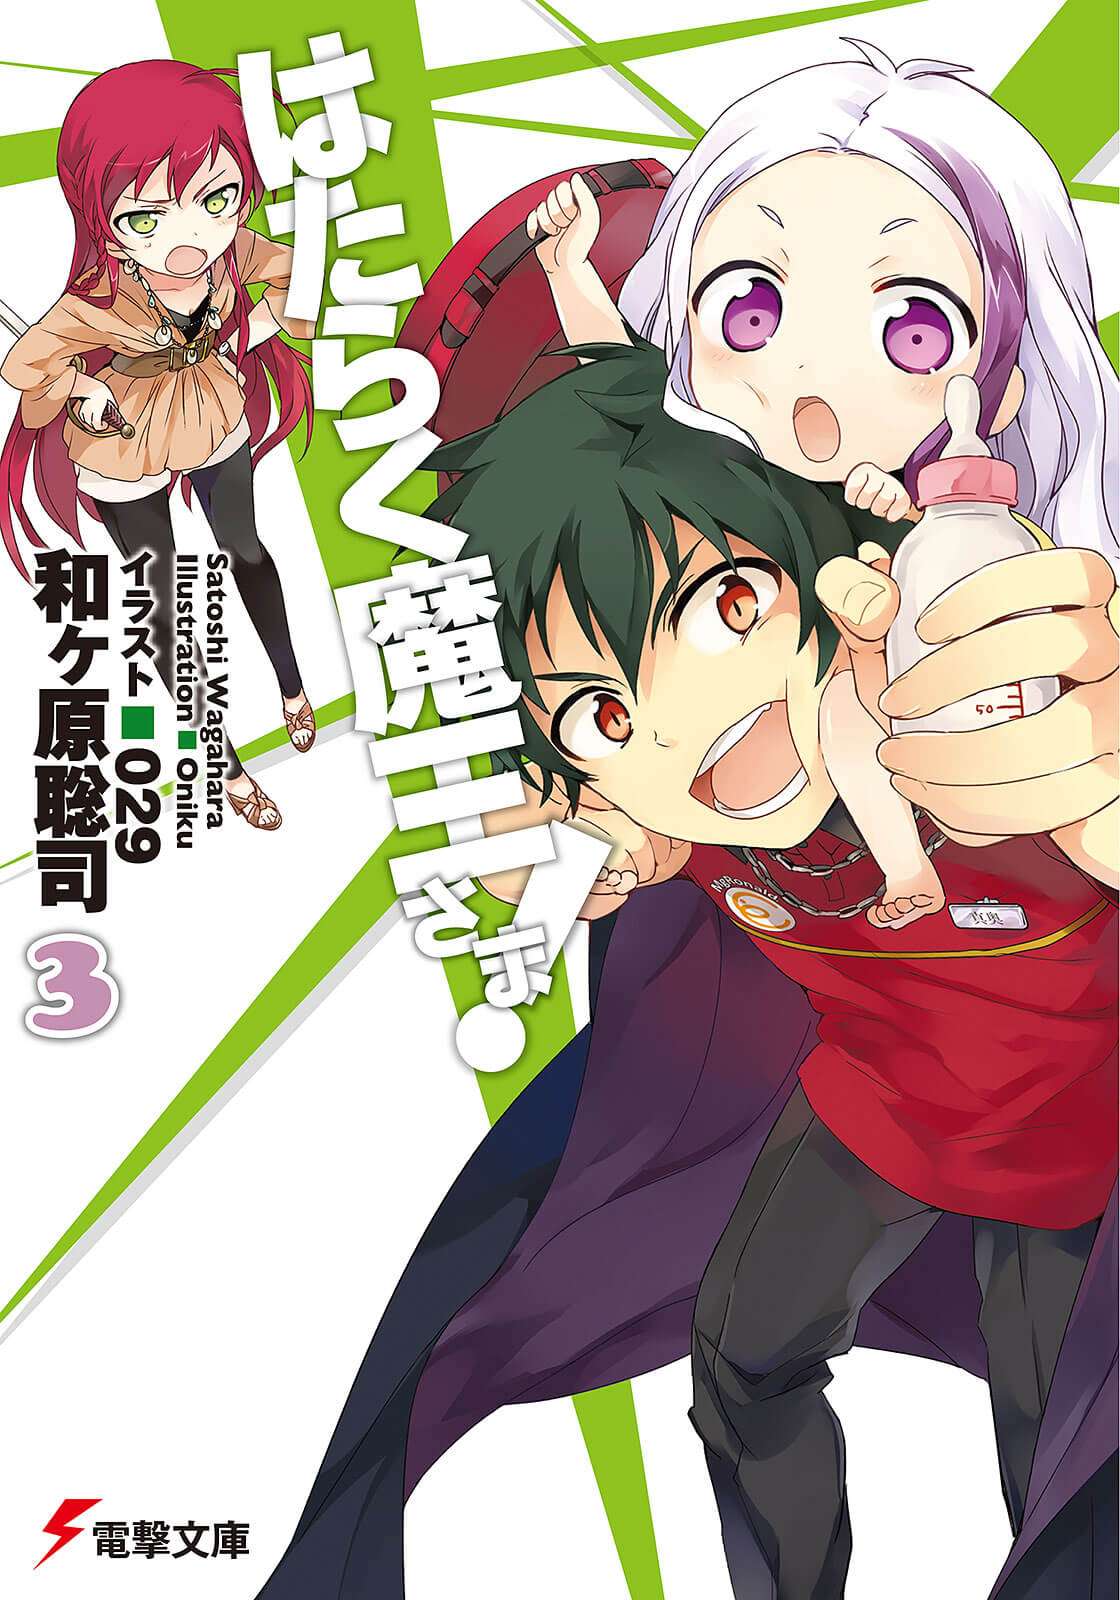 Hataraku Maou-sama - Light Novel anuncia Volume Final!